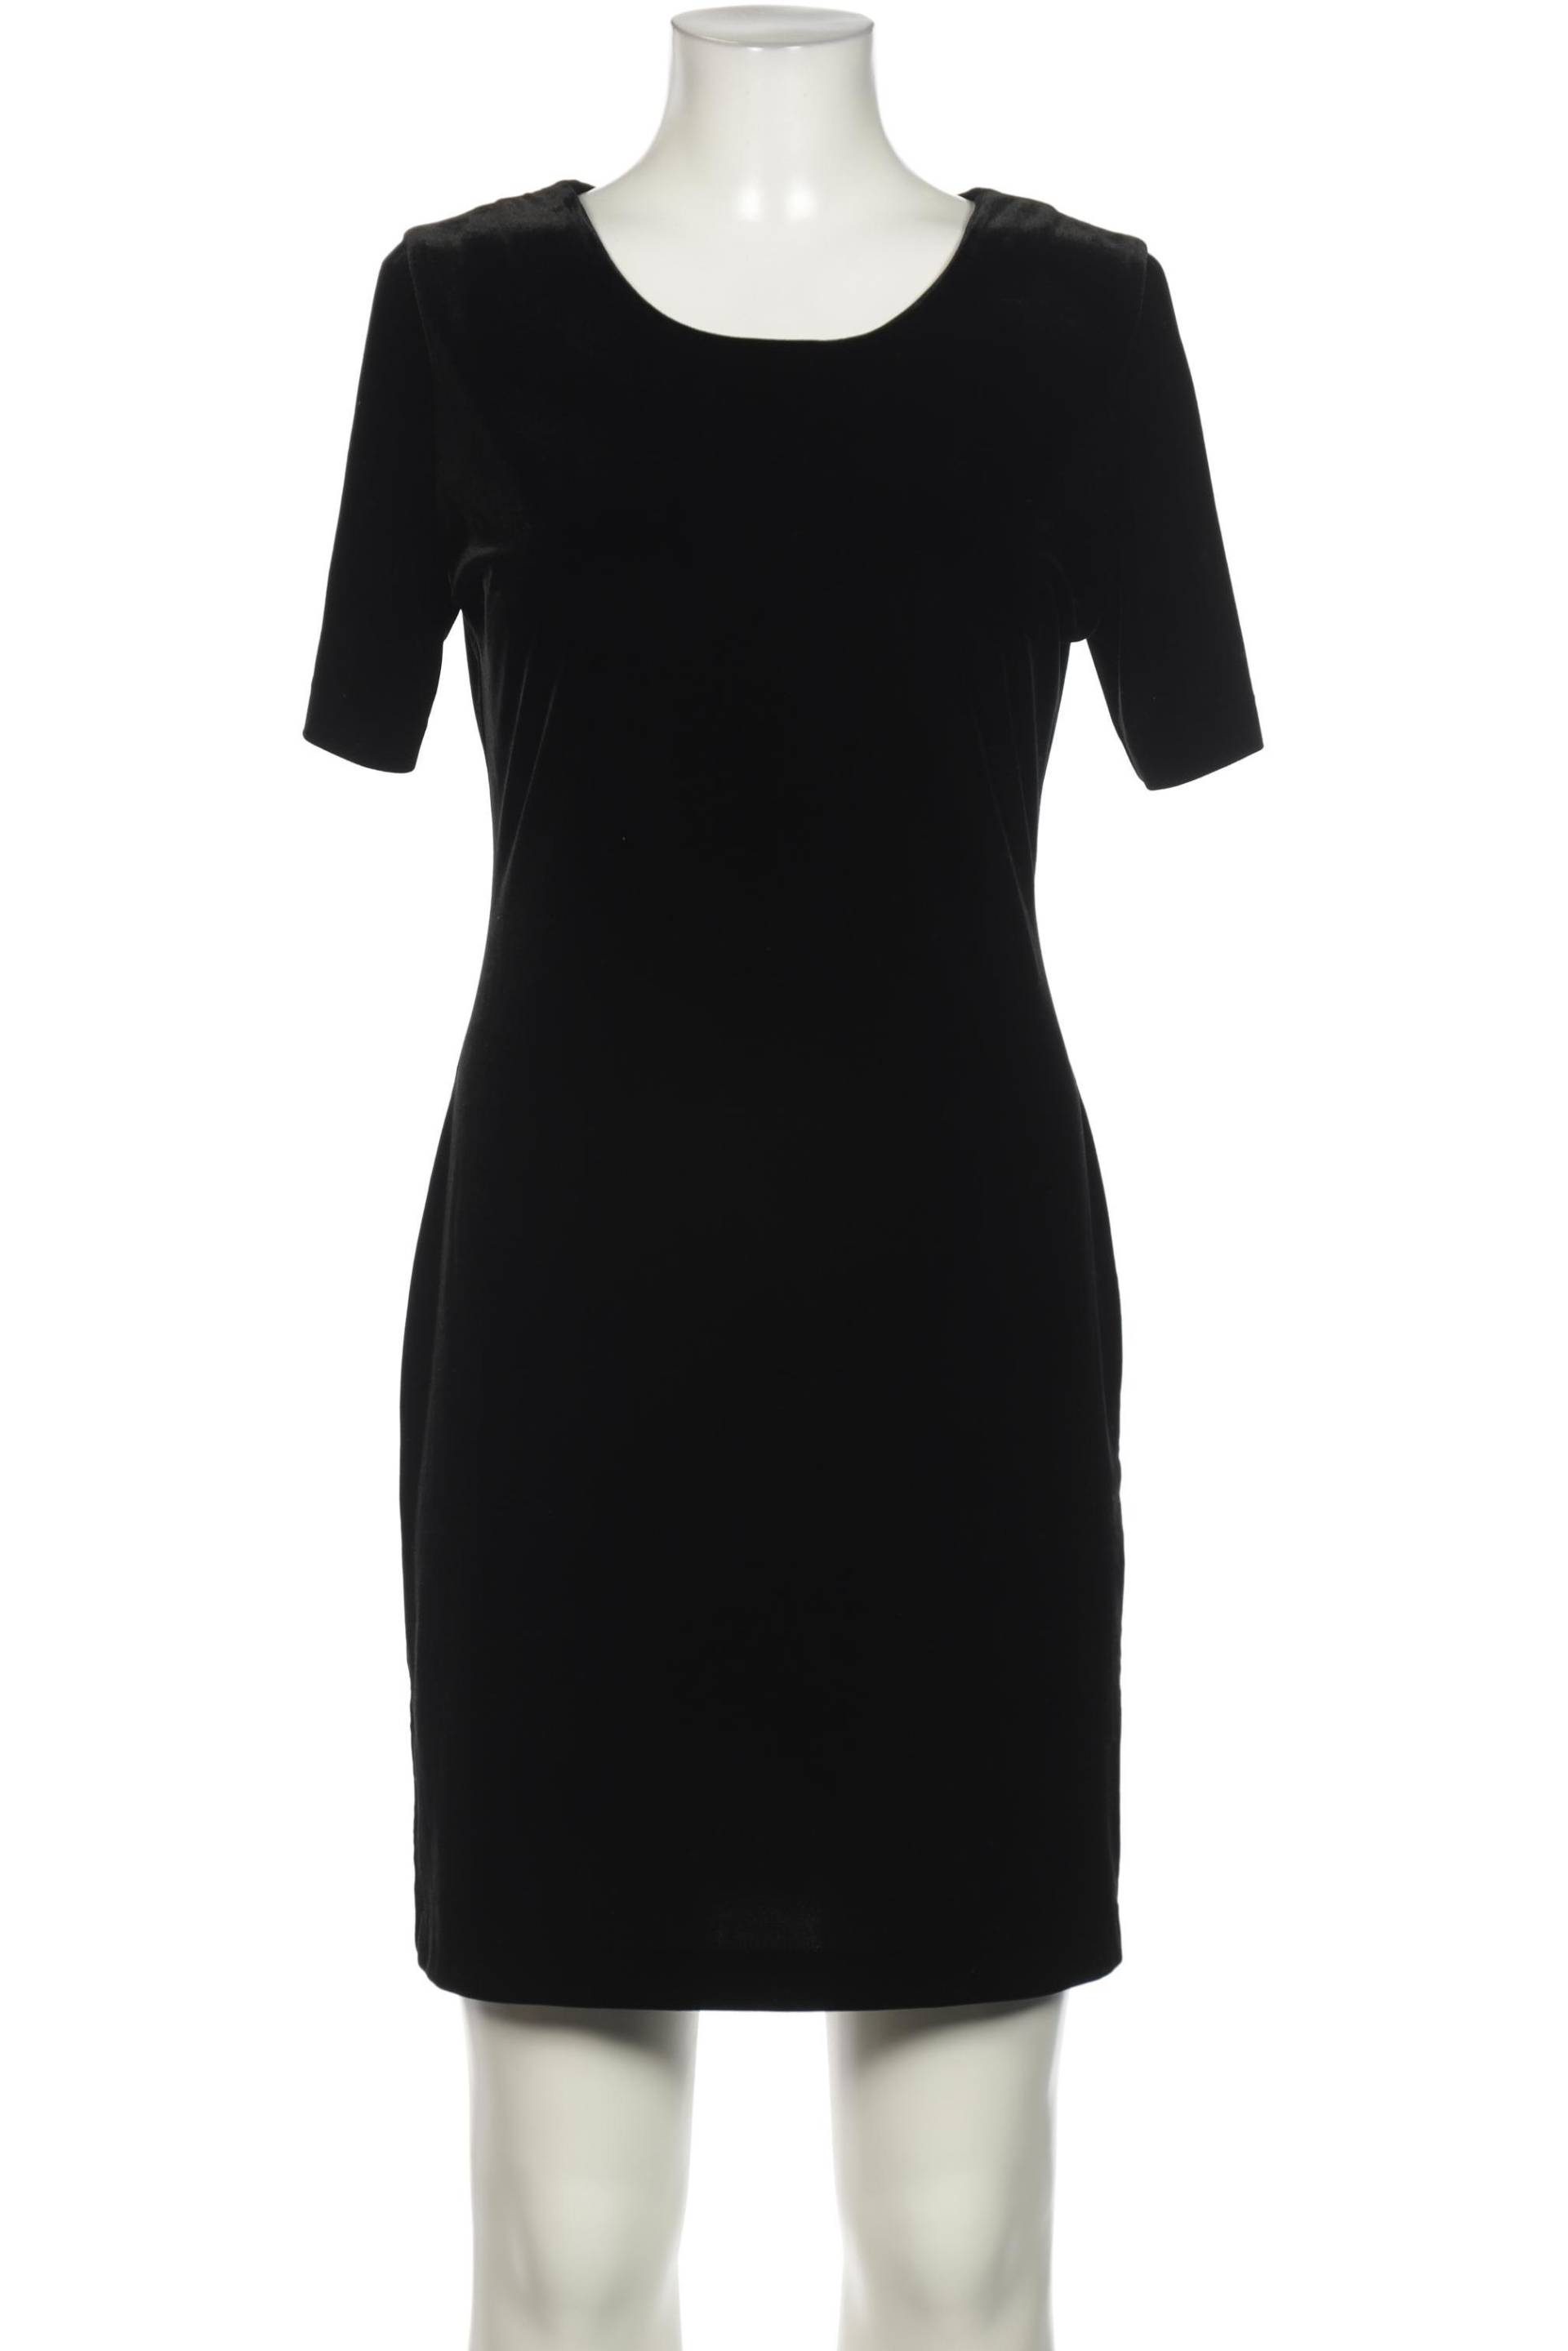 Franco Callegari Damen Kleid, schwarz, Gr. 40 von Franco Callegari